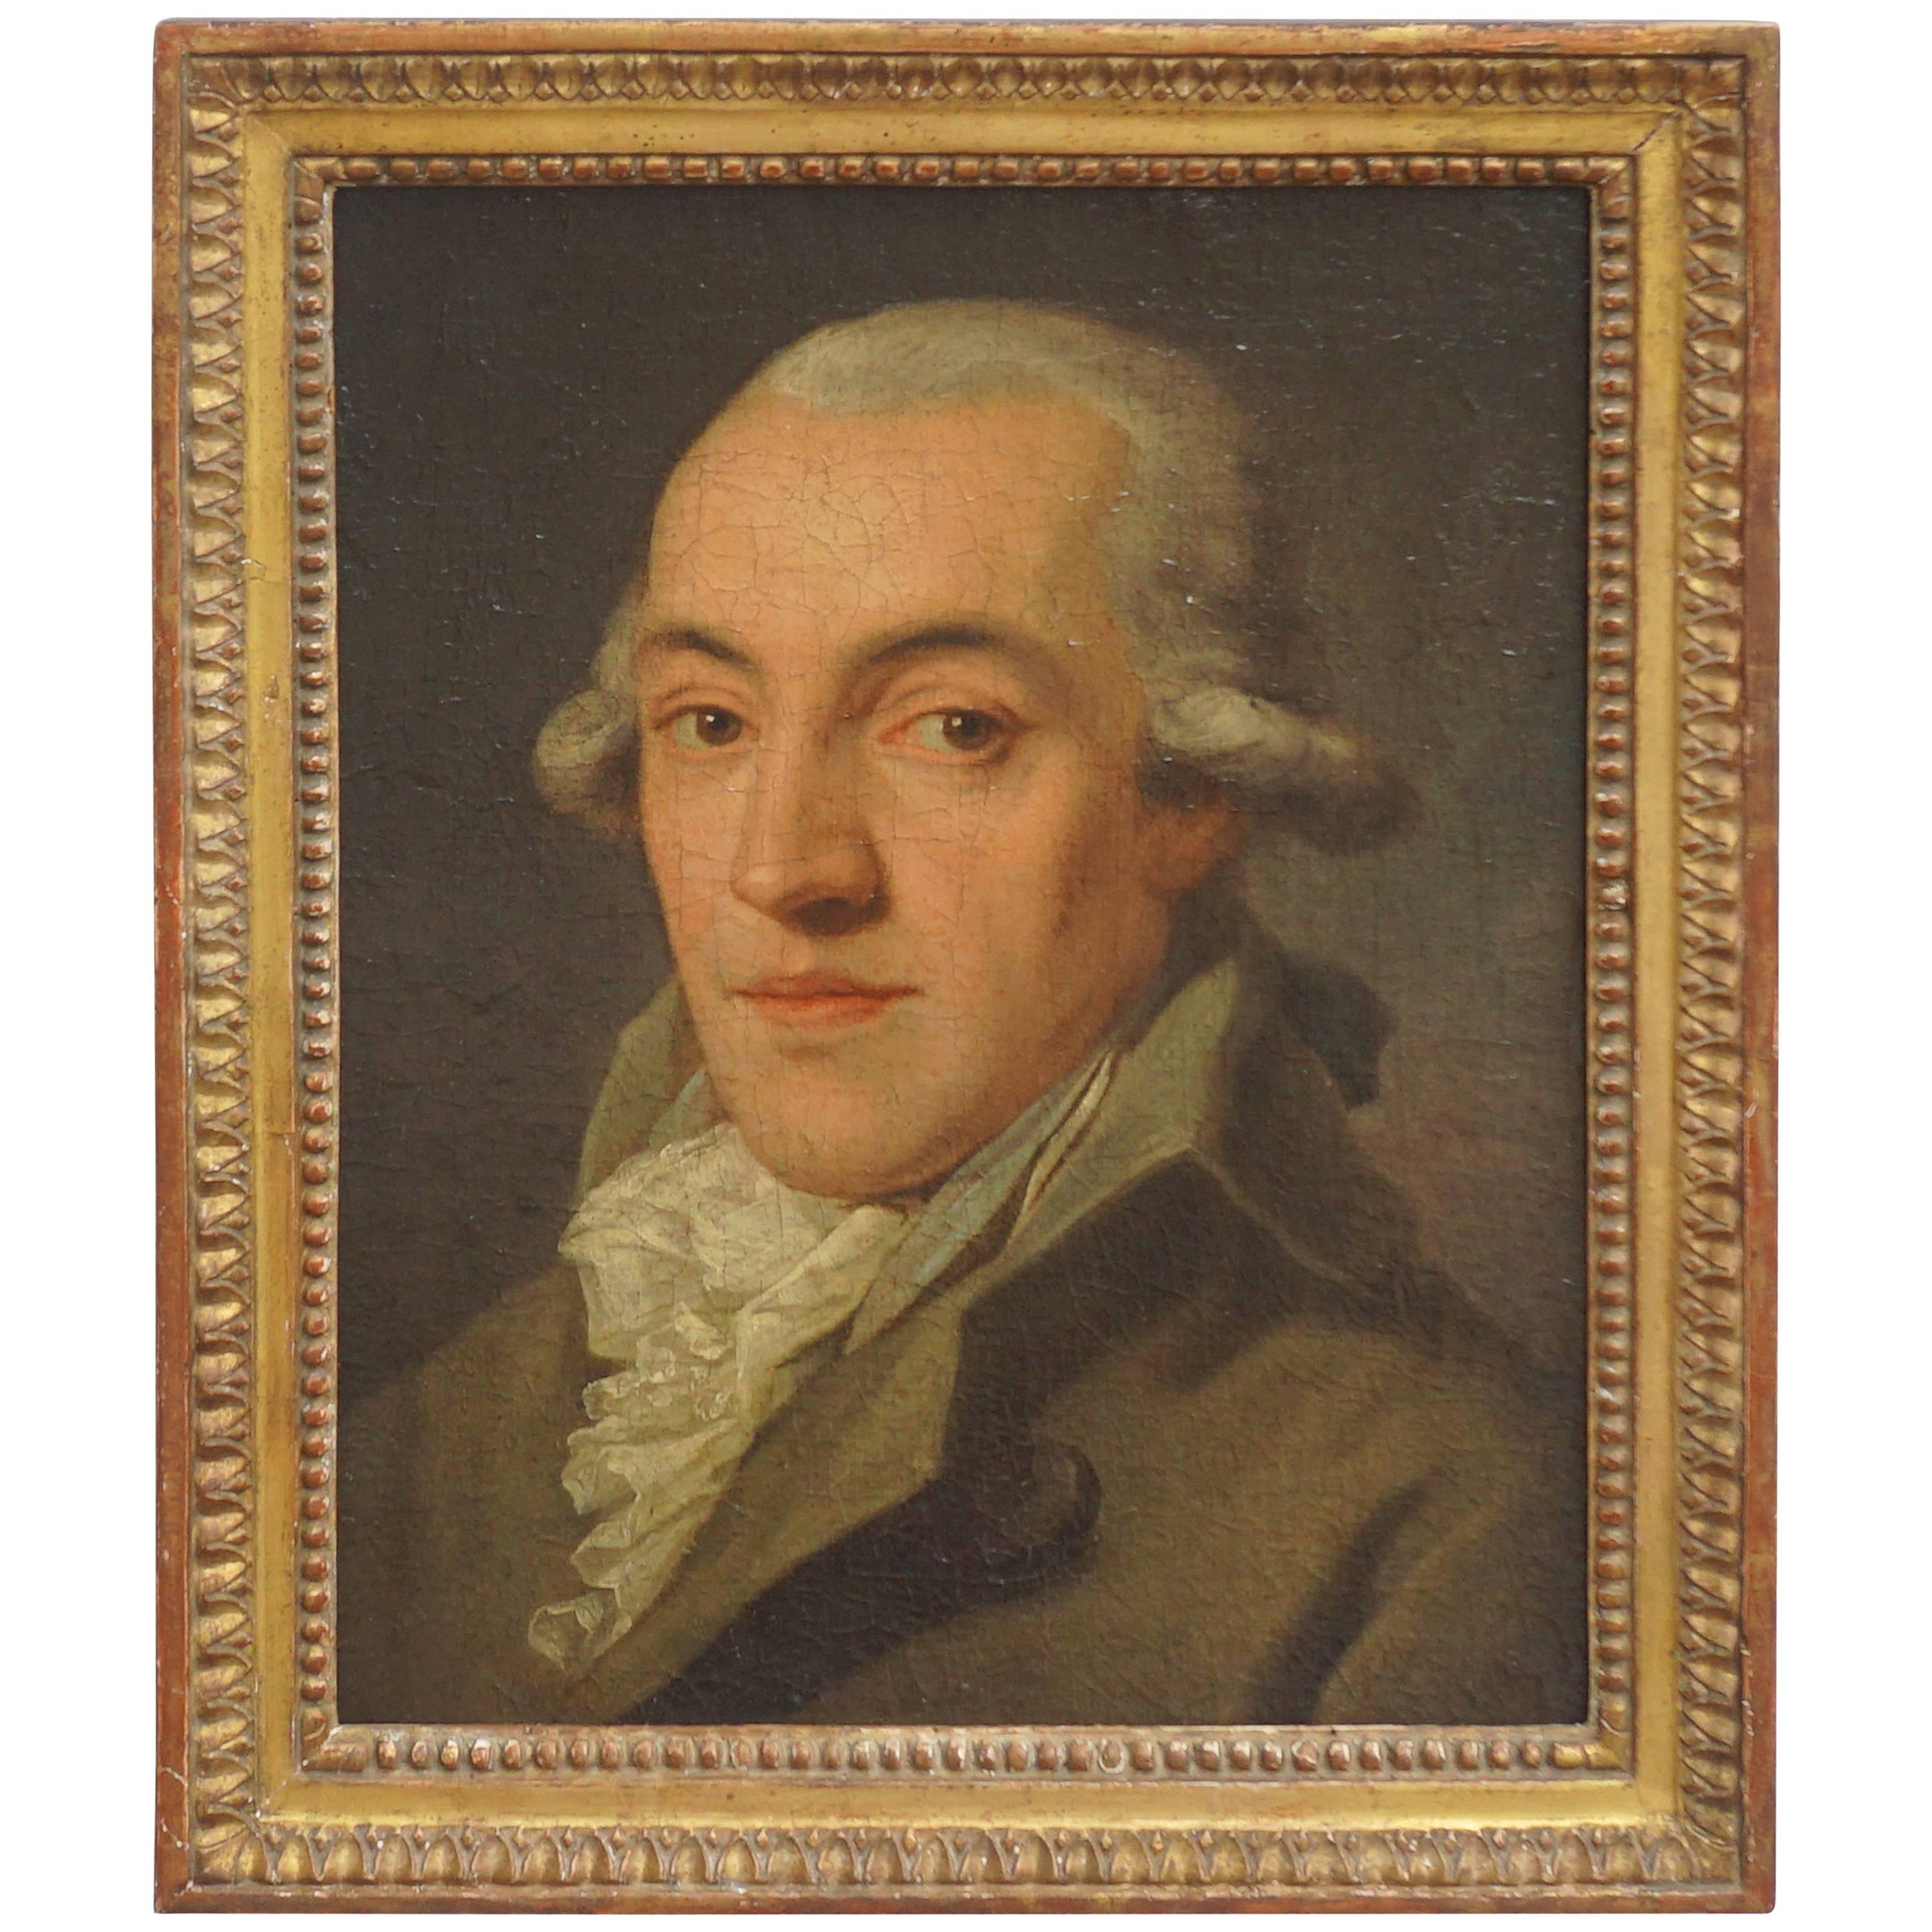 Portrait Painting of a Bewigged Gentleman, Prague, circa 1780